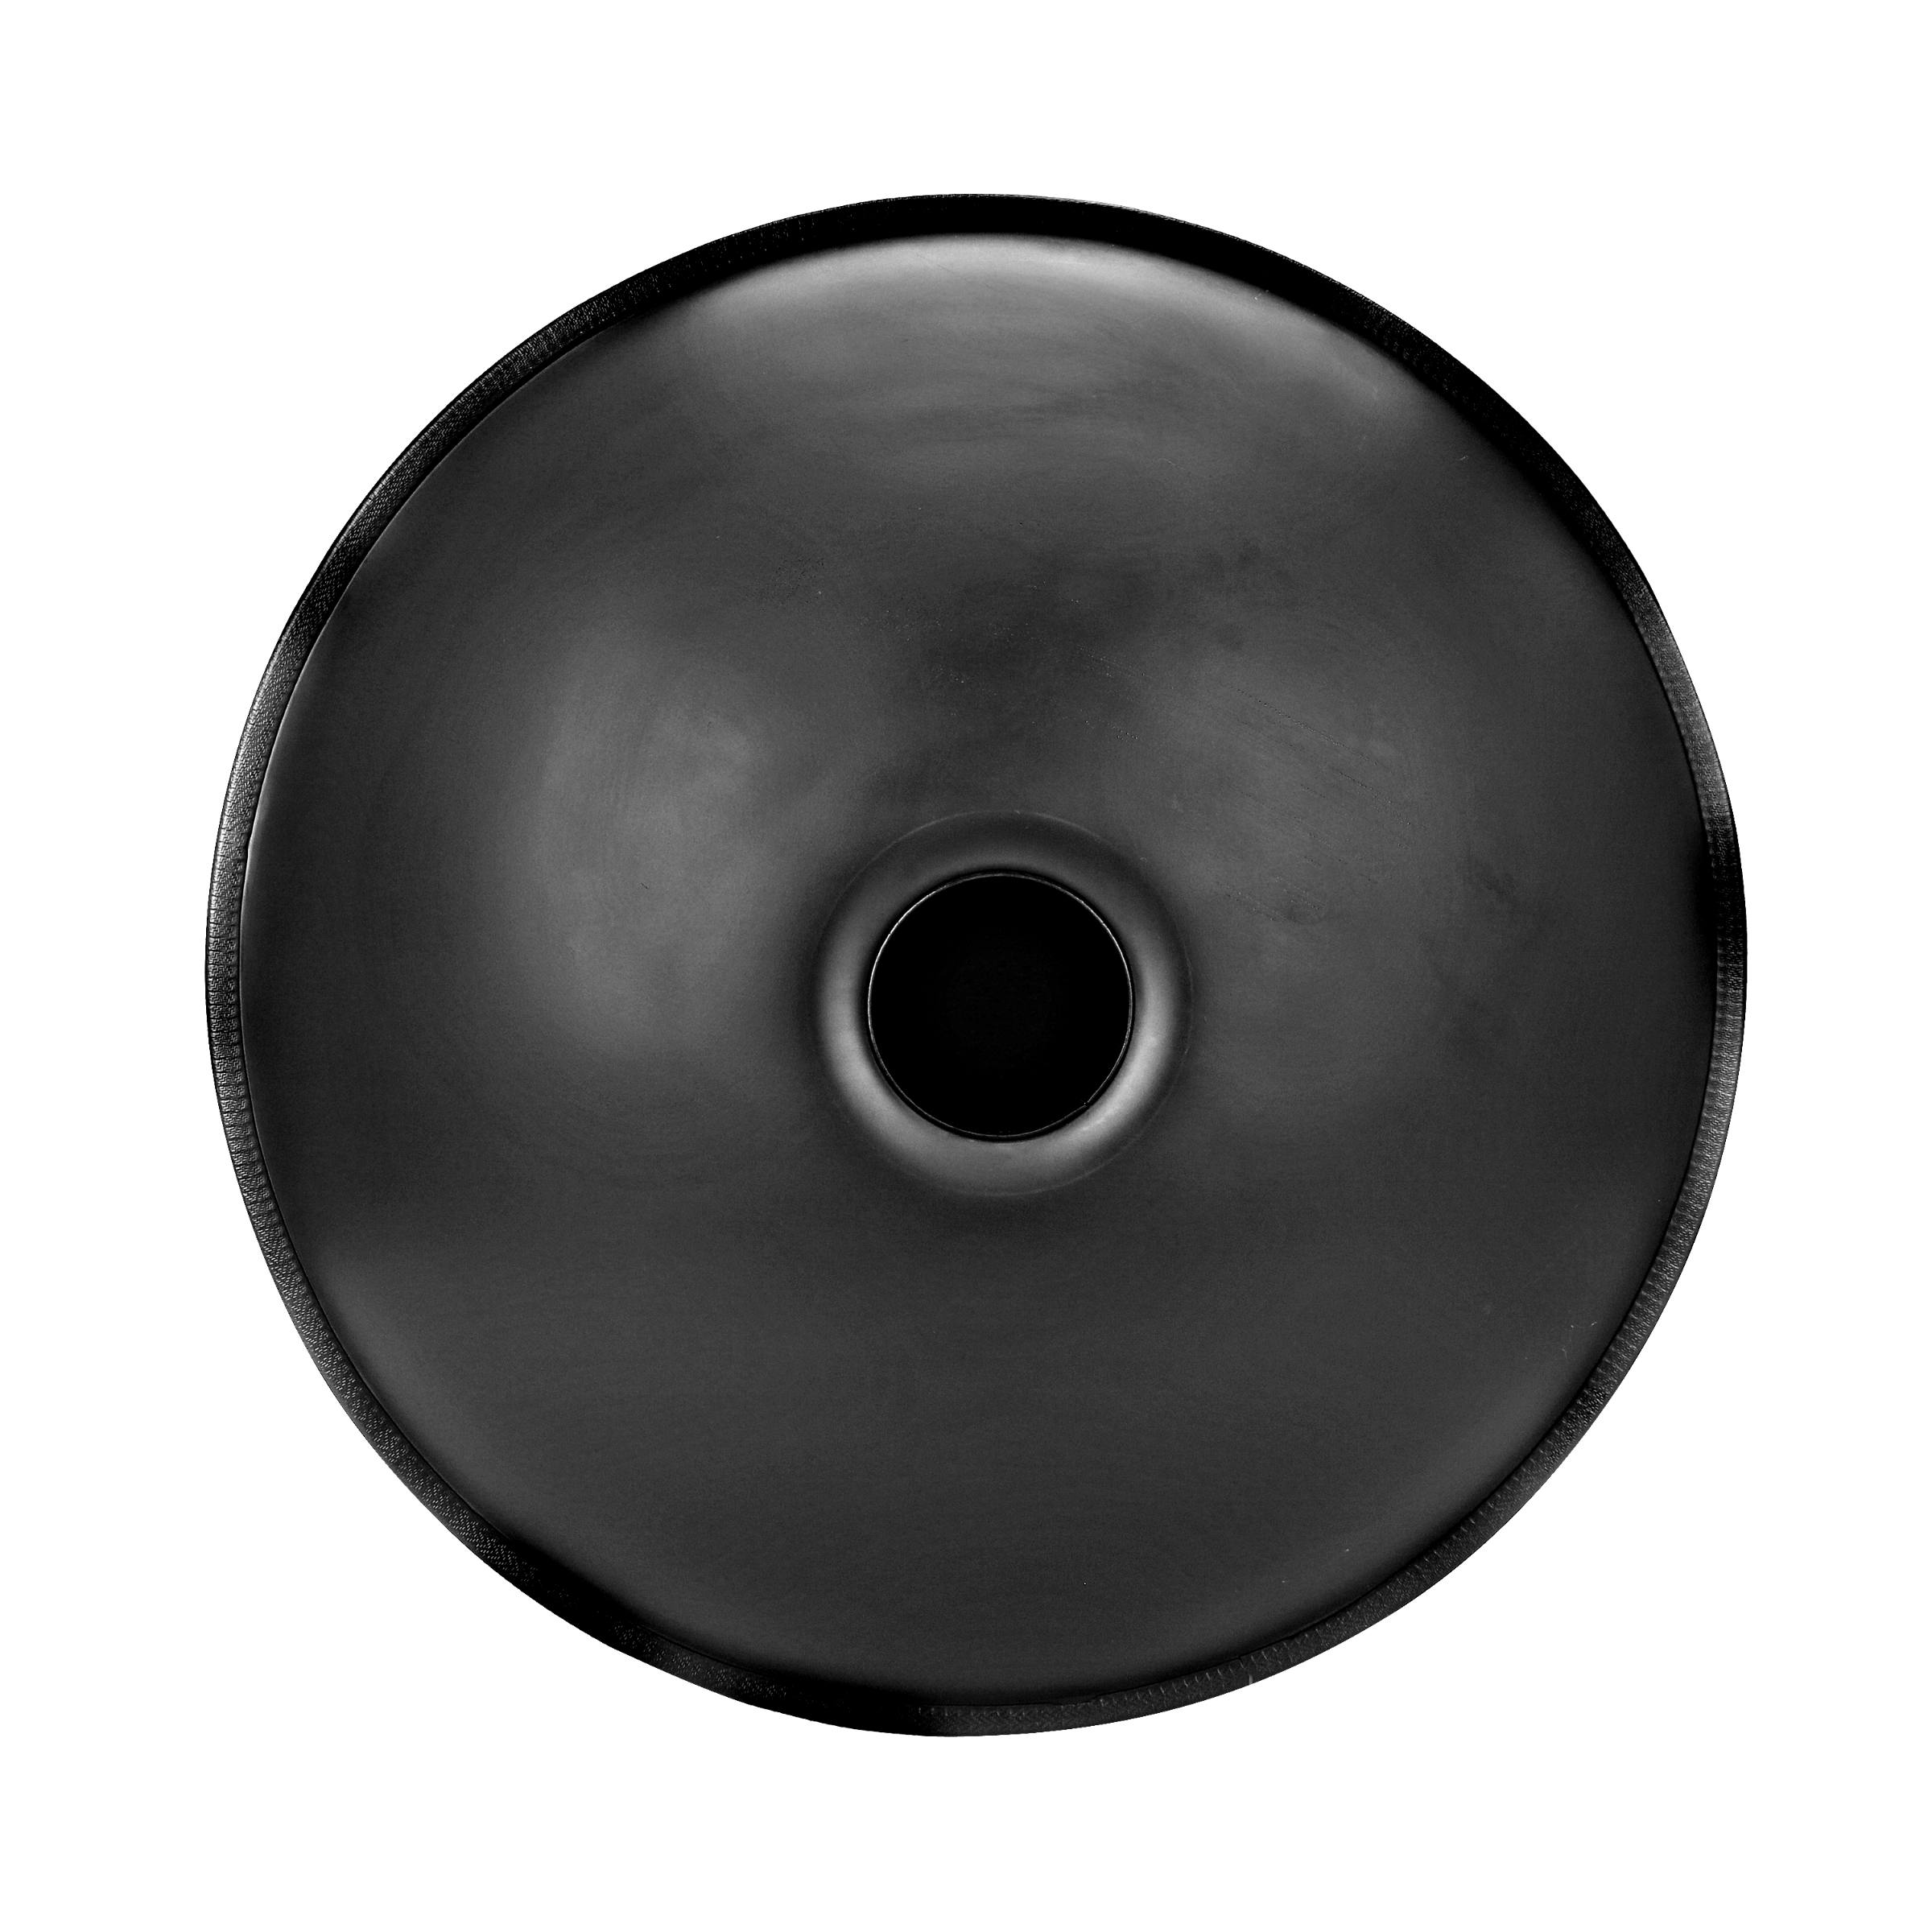 Handpan drum in solid black color